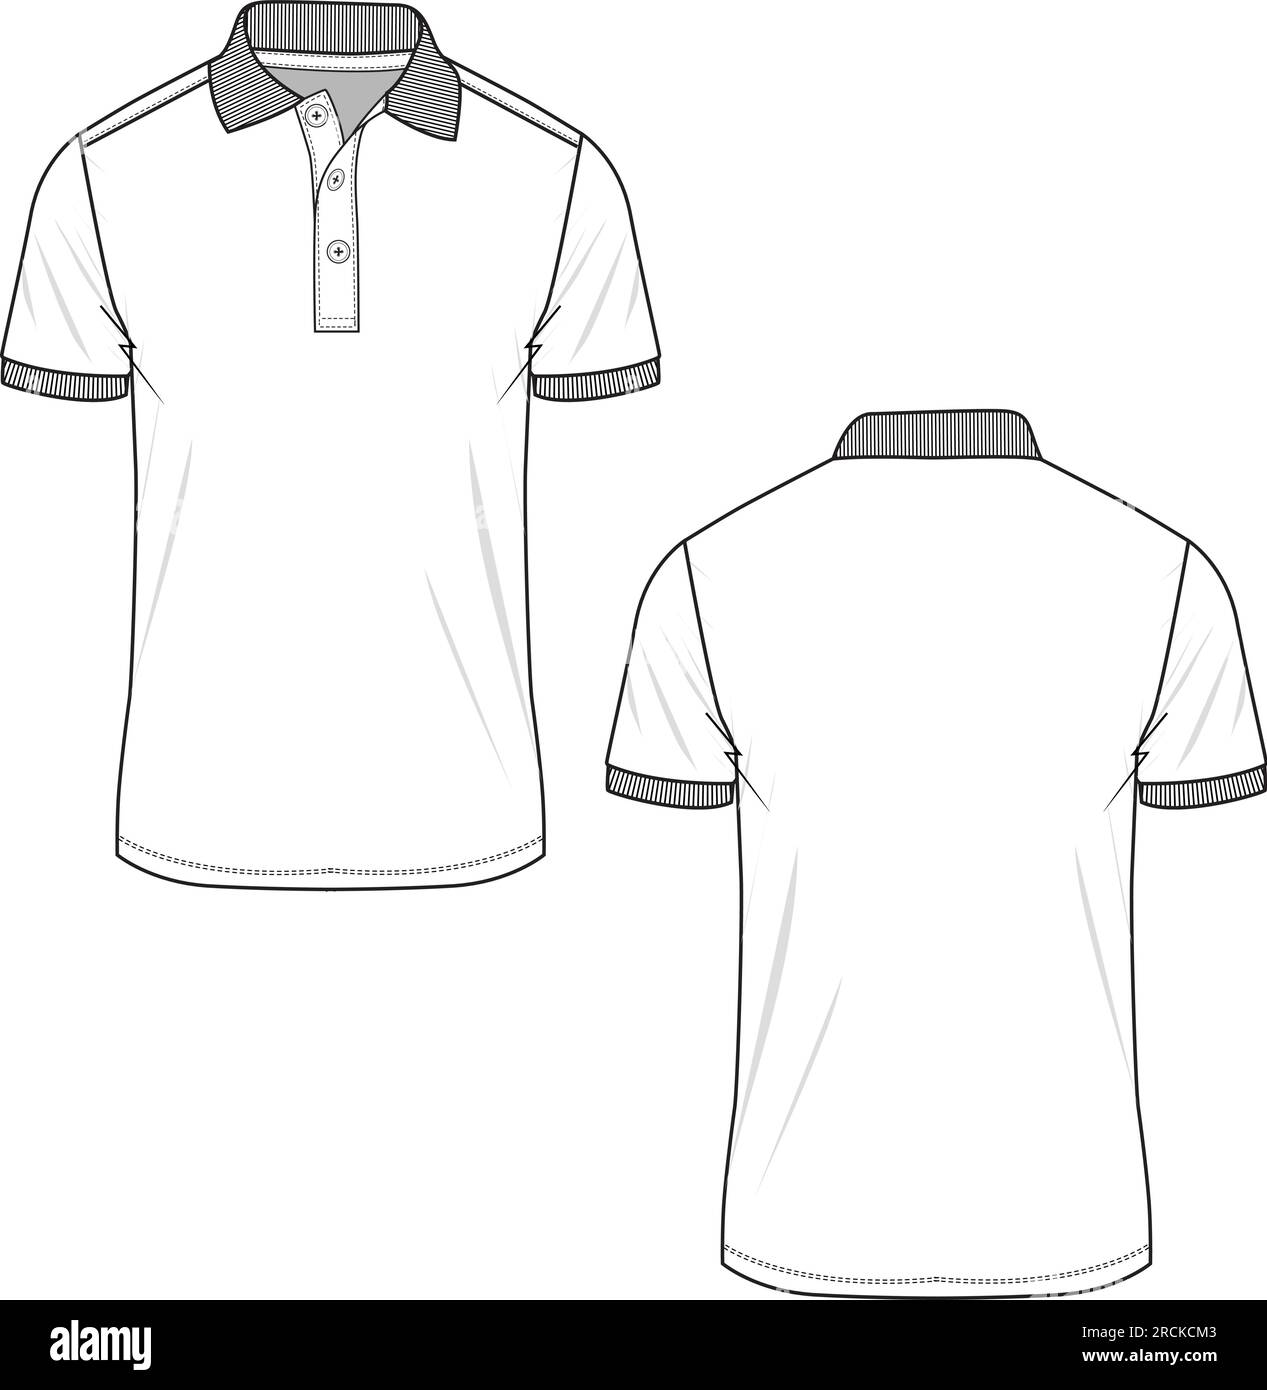 Polo T Shirt Technical Flat Sketch Stock Illustration 2134031453 |  Shutterstock